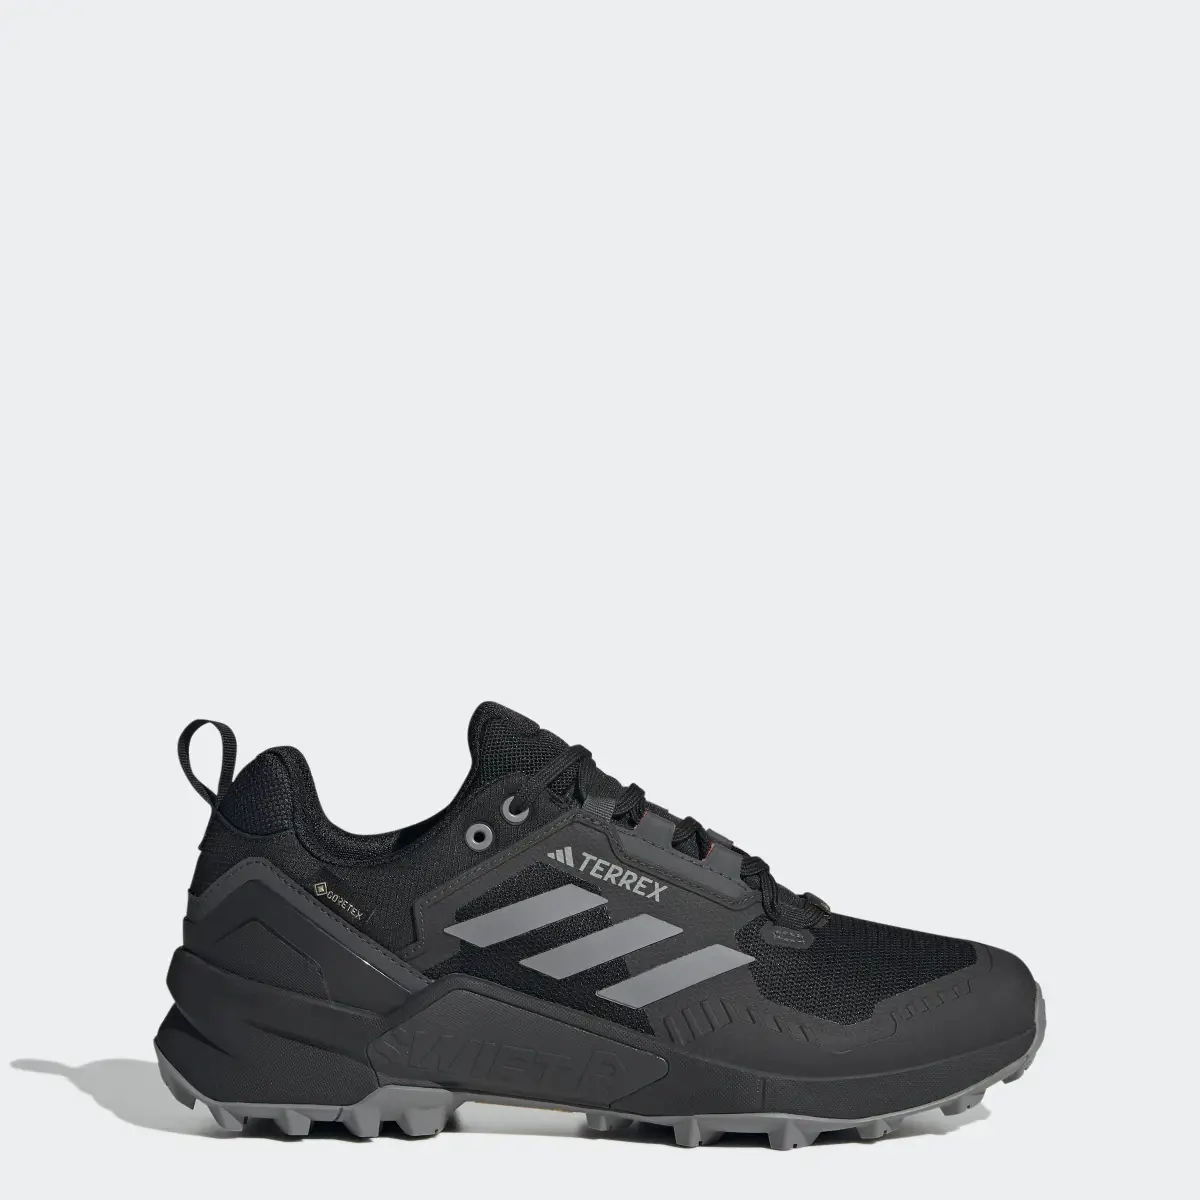 Adidas TERREX Swift R3 GORE-TEX Hiking Shoes. 1